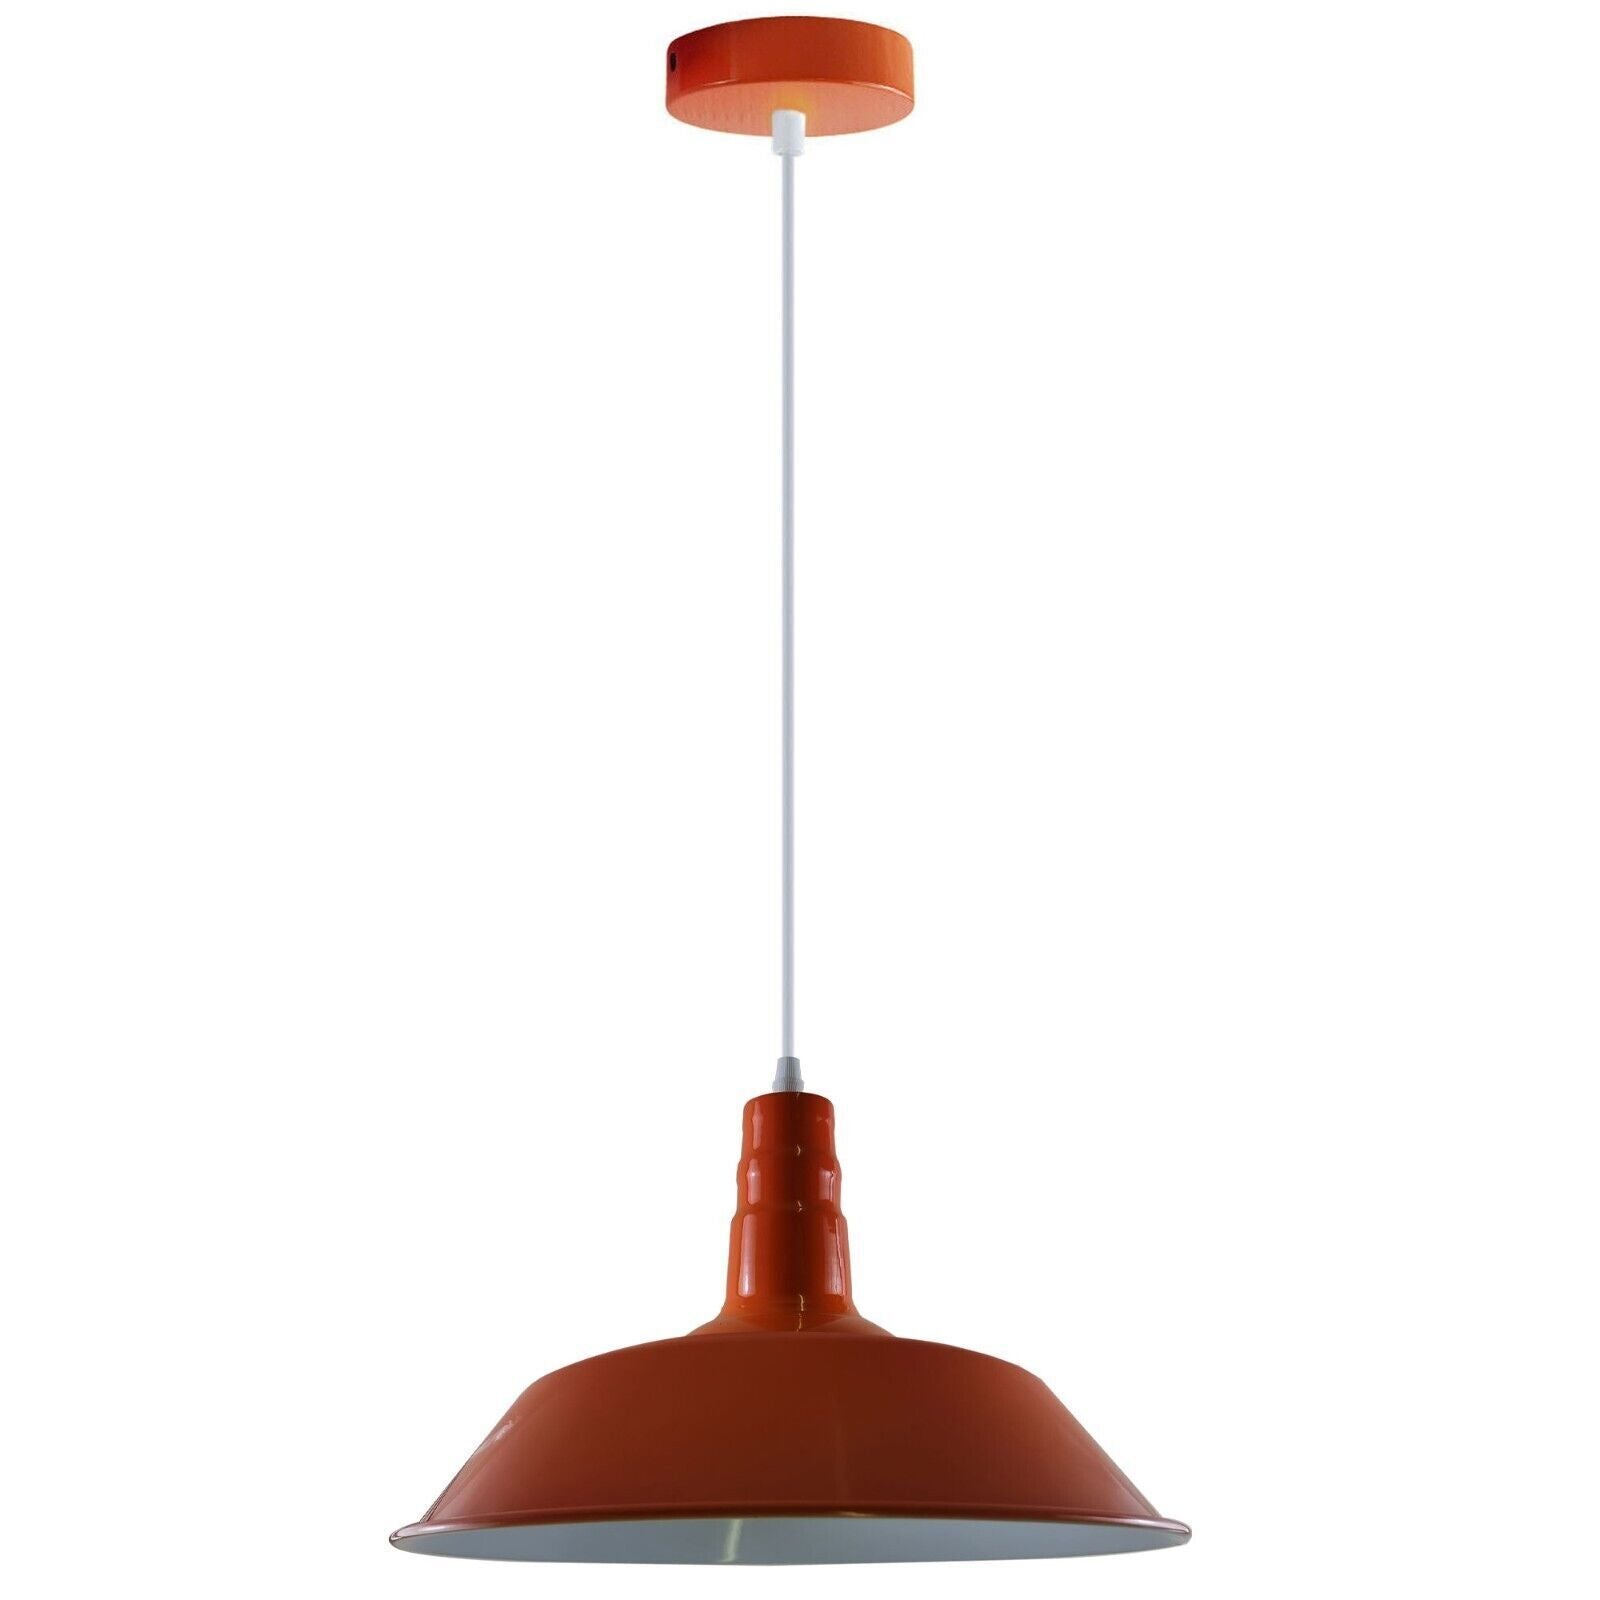 pendant Ceiling Lamp, Metal Light Shade Lighting UK E27 Edison base Decorate Height Adjustable Pendant Light for Bar, Restaurant , Home and Kitchen